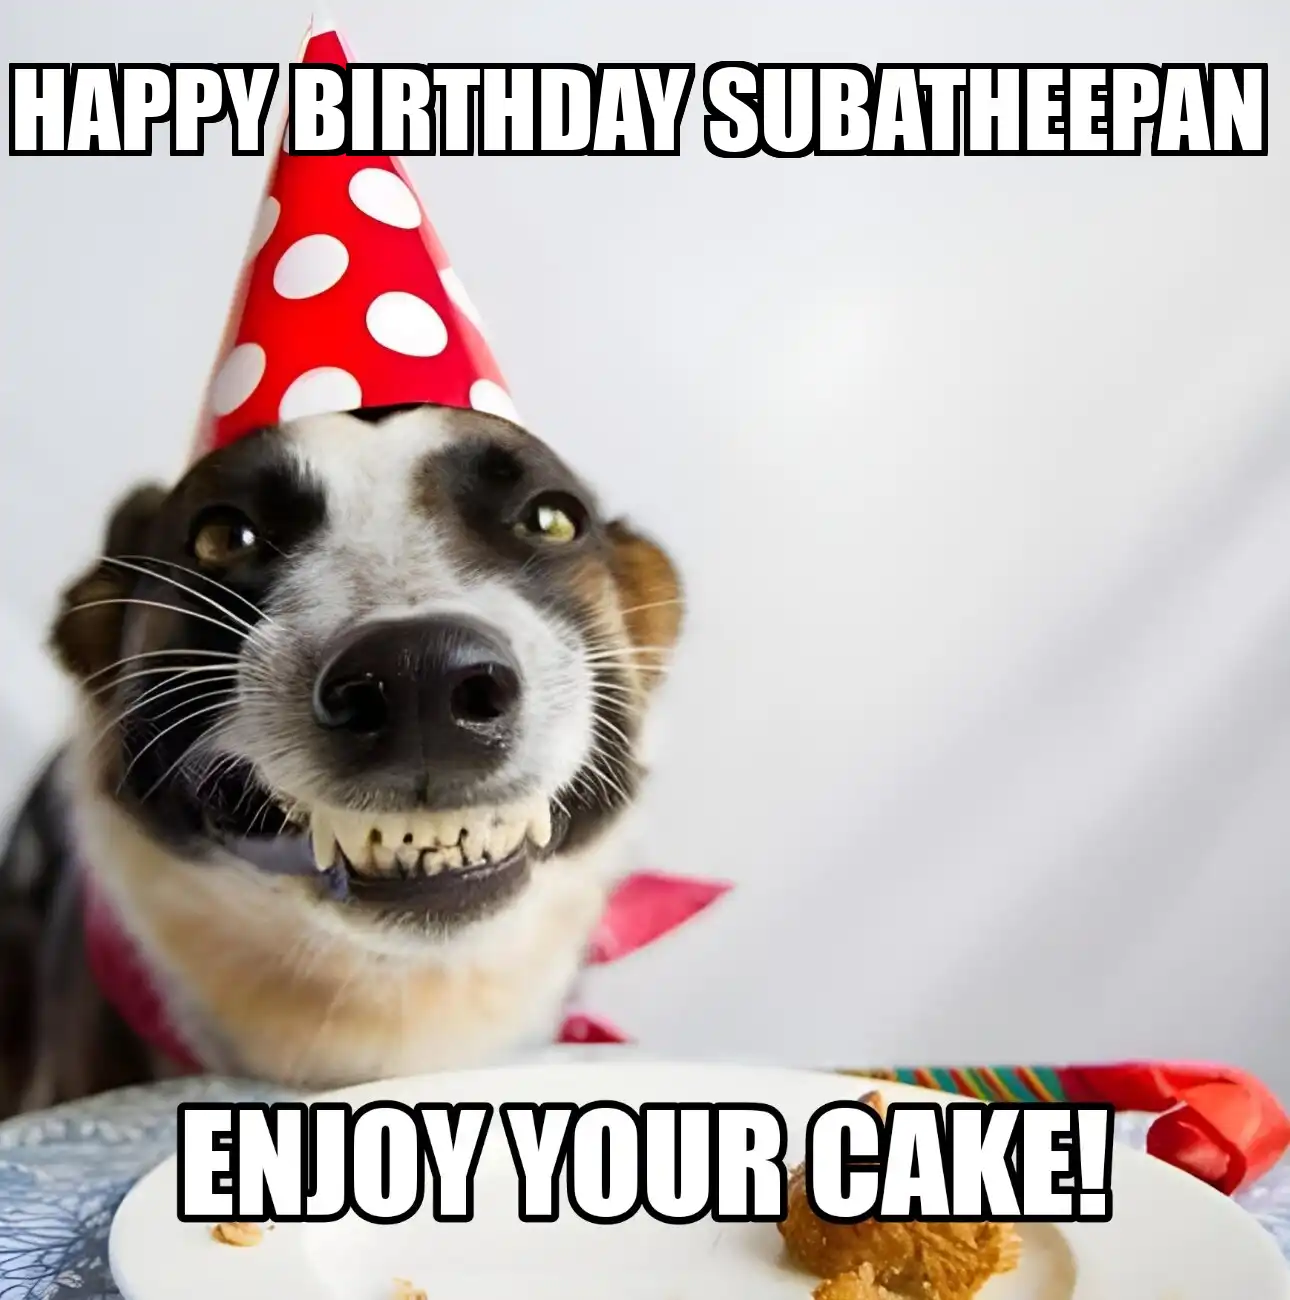 Happy Birthday Subatheepan Enjoy Your Cake Dog Meme